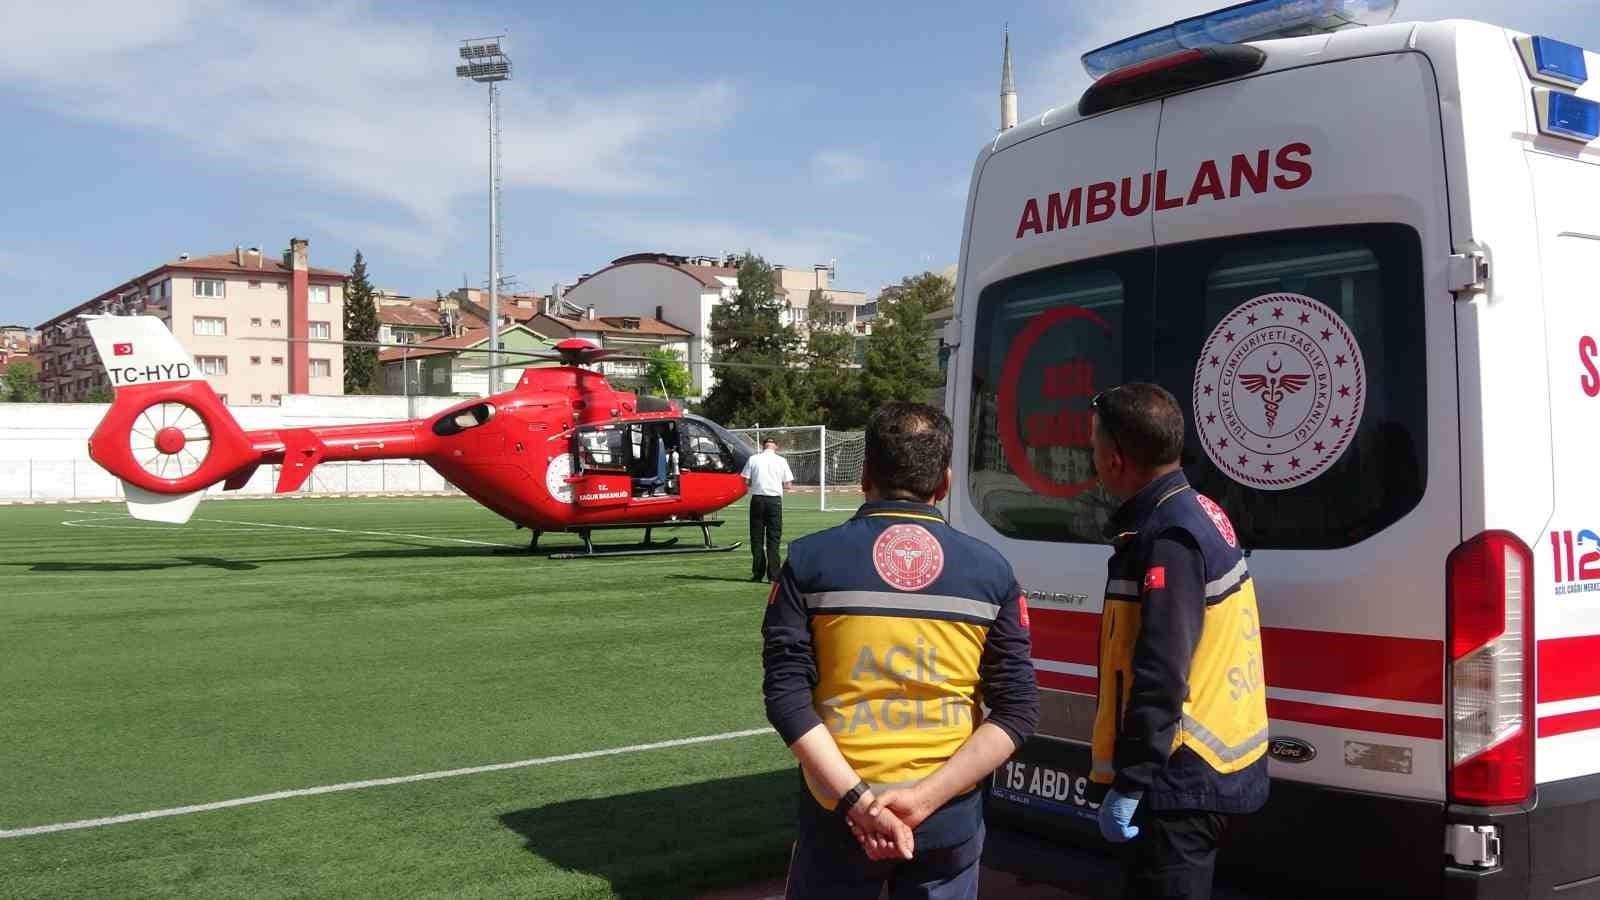 ambulans helikopter nakil bekleyen koah hastasi icin havalandi 5 7ztfj92T